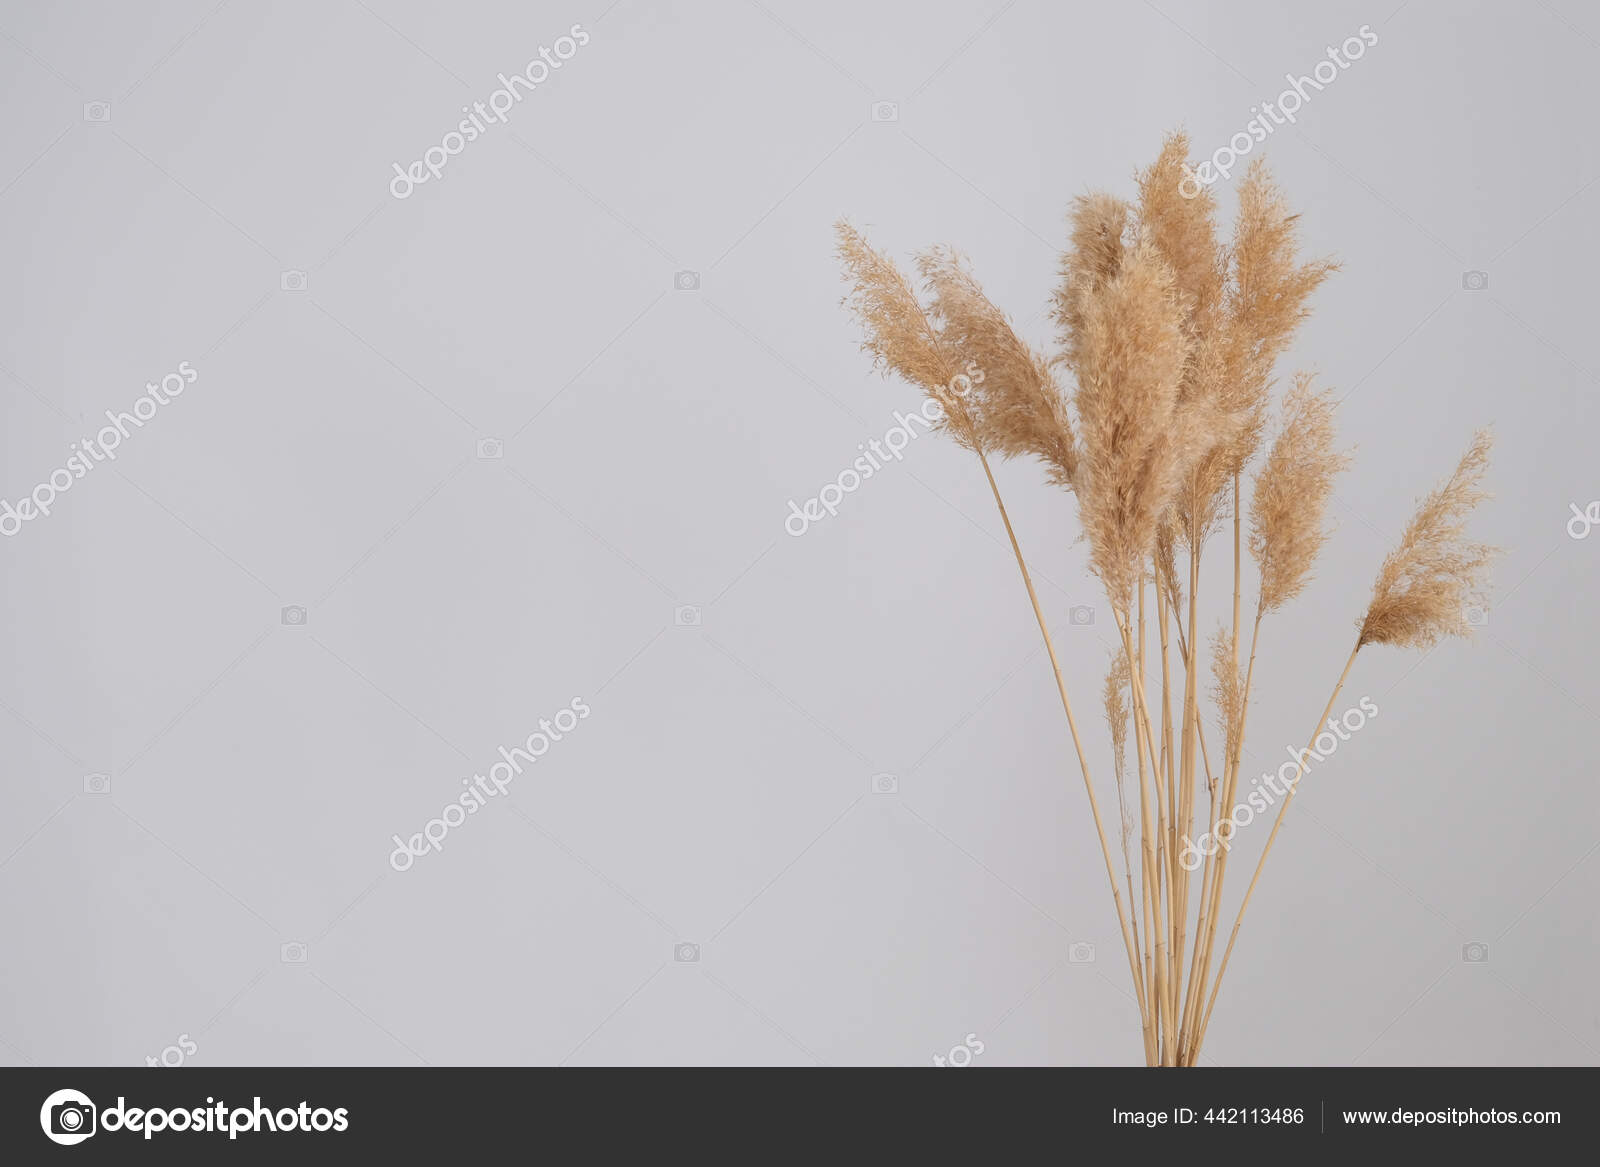 https://st2.depositphotos.com/22411670/44211/i/1600/depositphotos_442113486-stock-photo-pampas-grass-reed-plume-stem.jpg